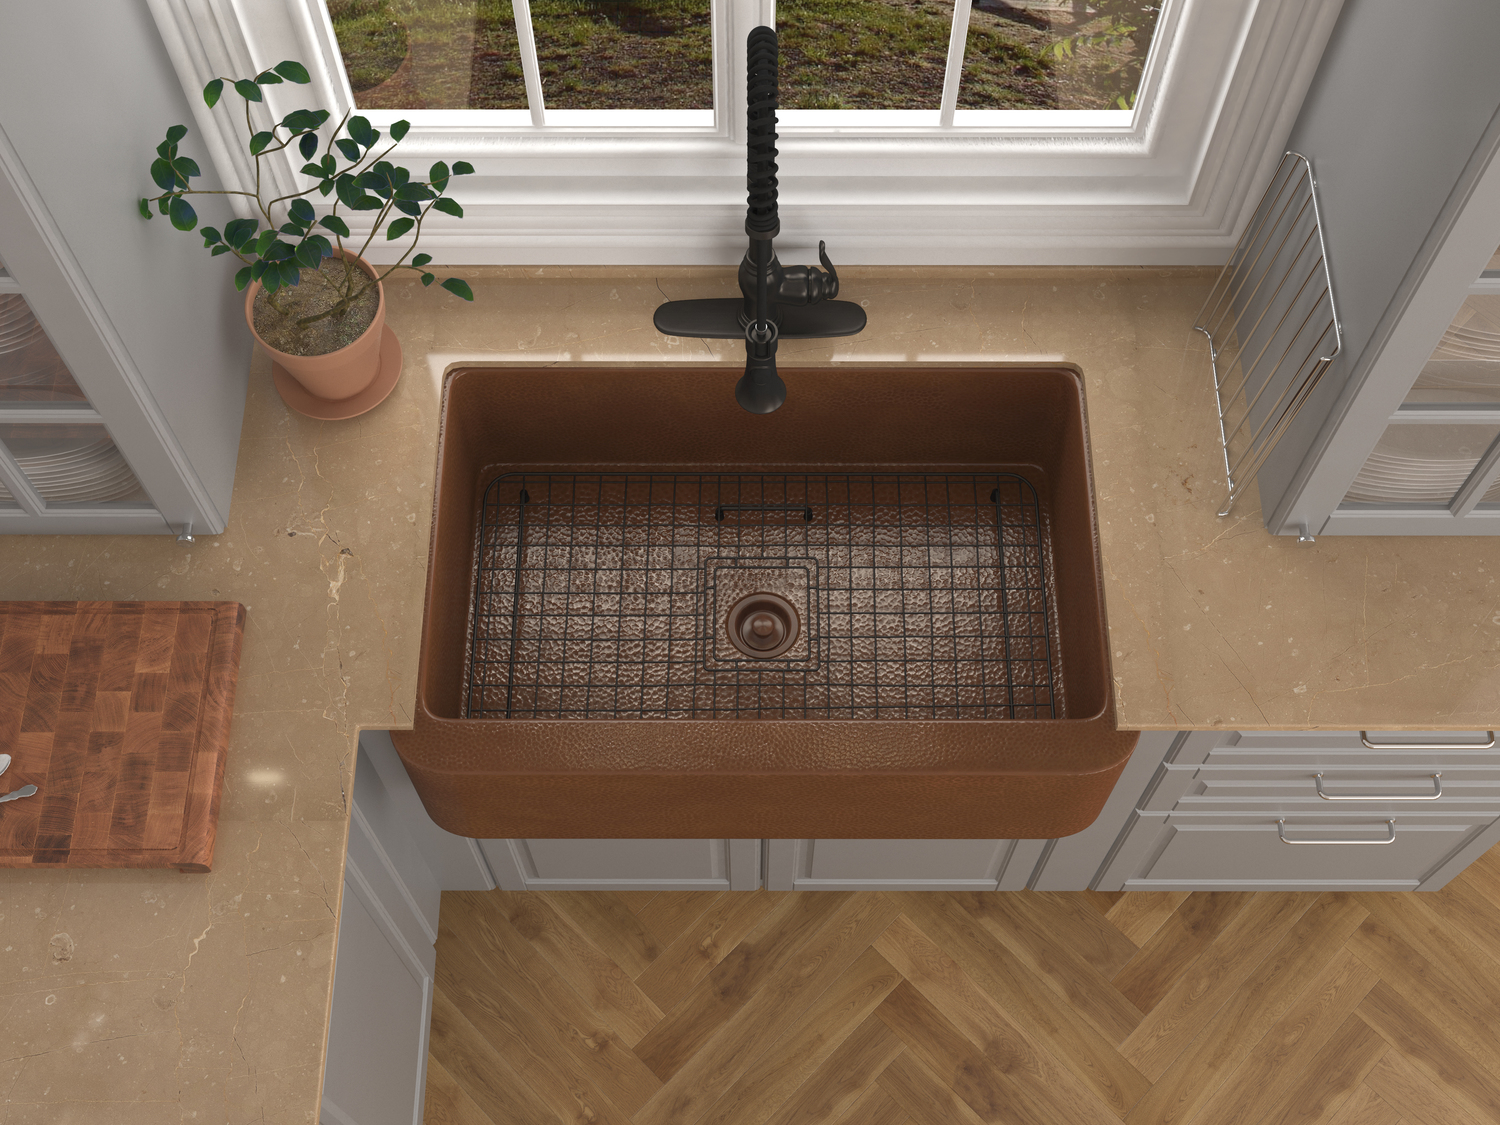 sink and drainboard Anzzi KITCHEN - Kitchen Sinks - Farmhouse - Copper Copper